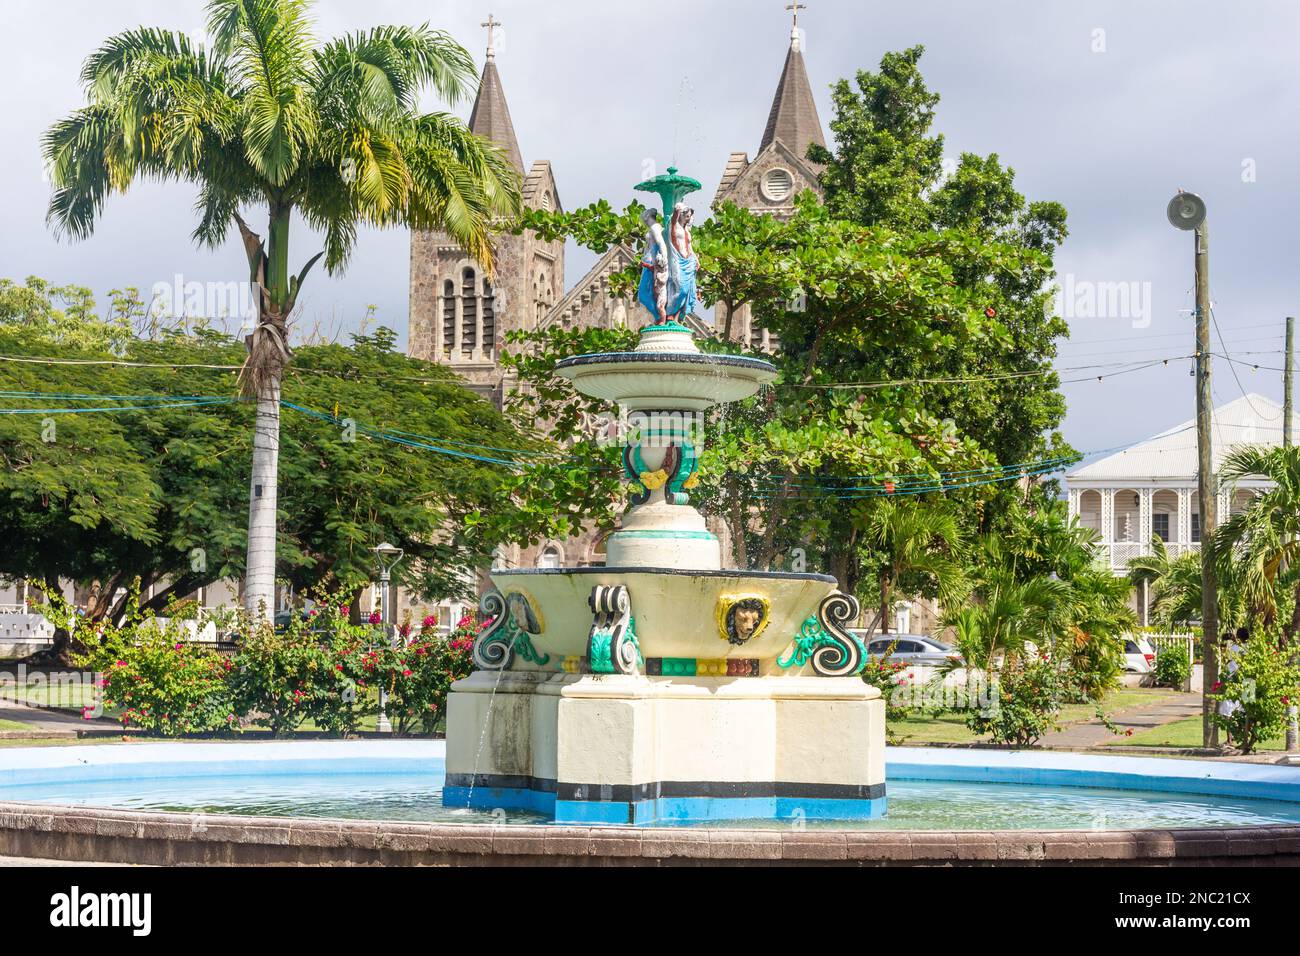 Fontana in Piazza dell'Indipendenza e Immacolata Concezione Cattedrale Cattolica, Basseterre, St Kitts, St. Kitts e Nevis, piccole Antille, Caraibi Foto Stock